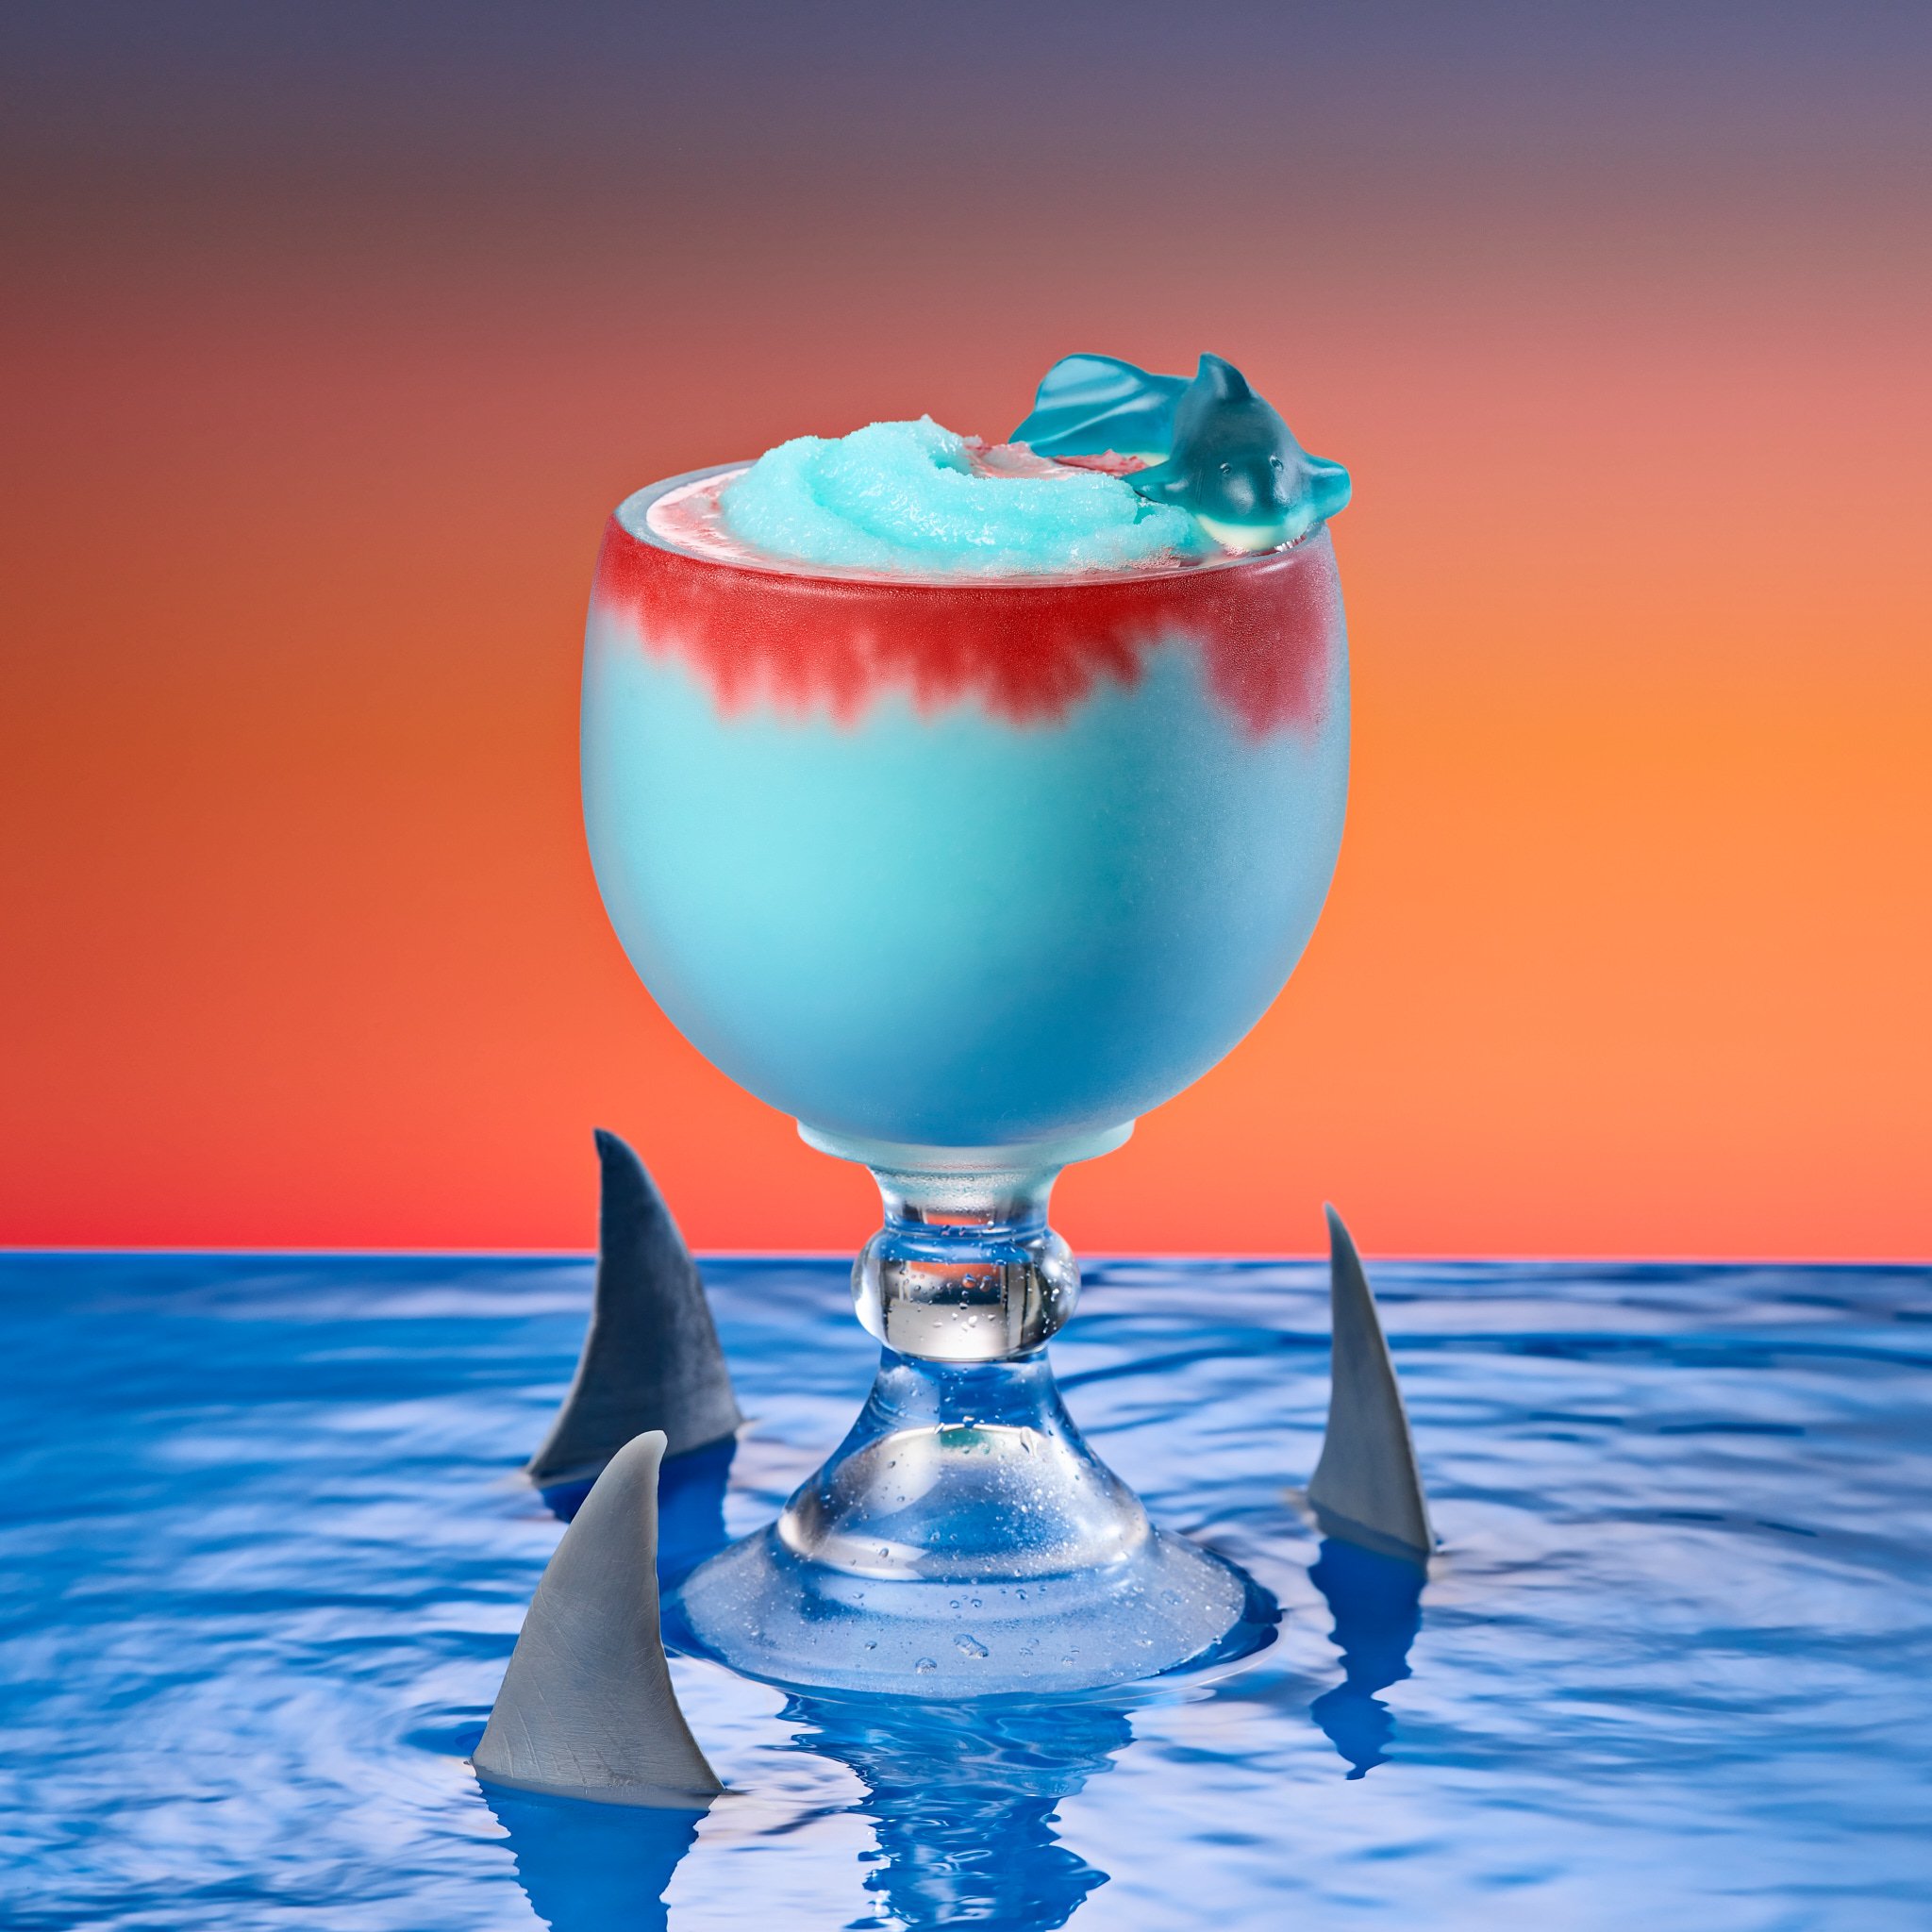 14-Shark-Bowl-(situational)_0771_B_R1_V4.jpg